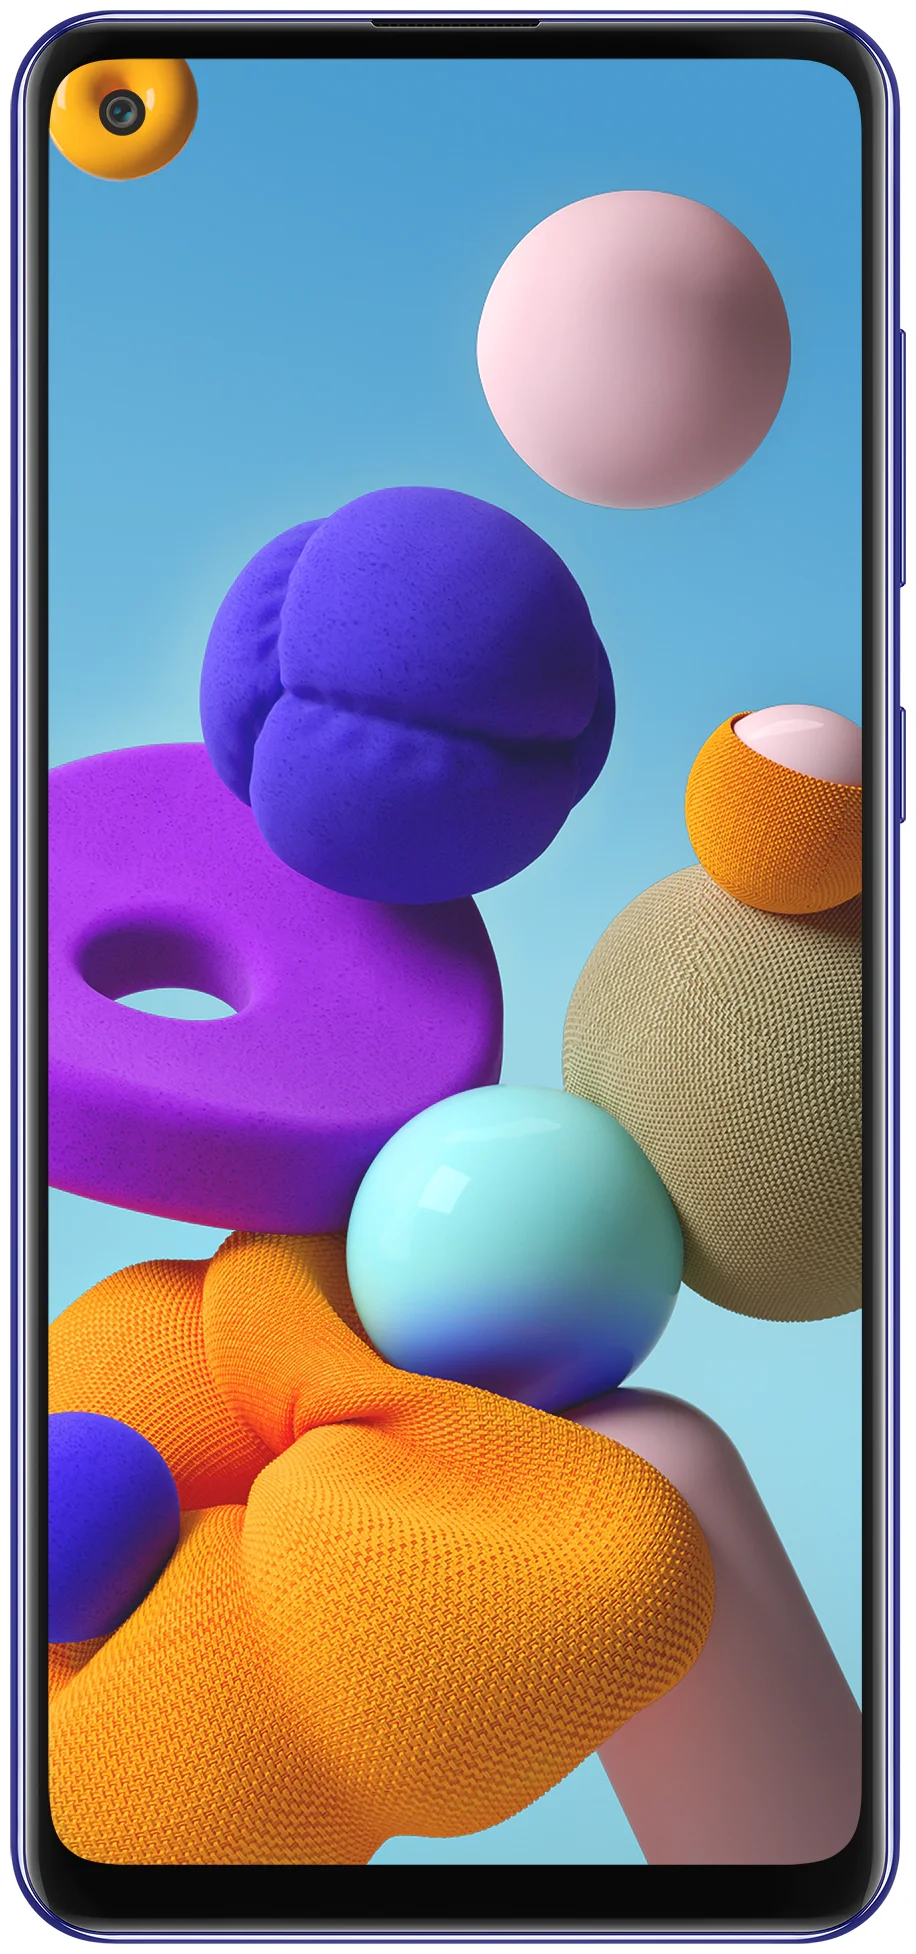 Samsung Galaxy A21s 3/32GB - операционная система: Android 10